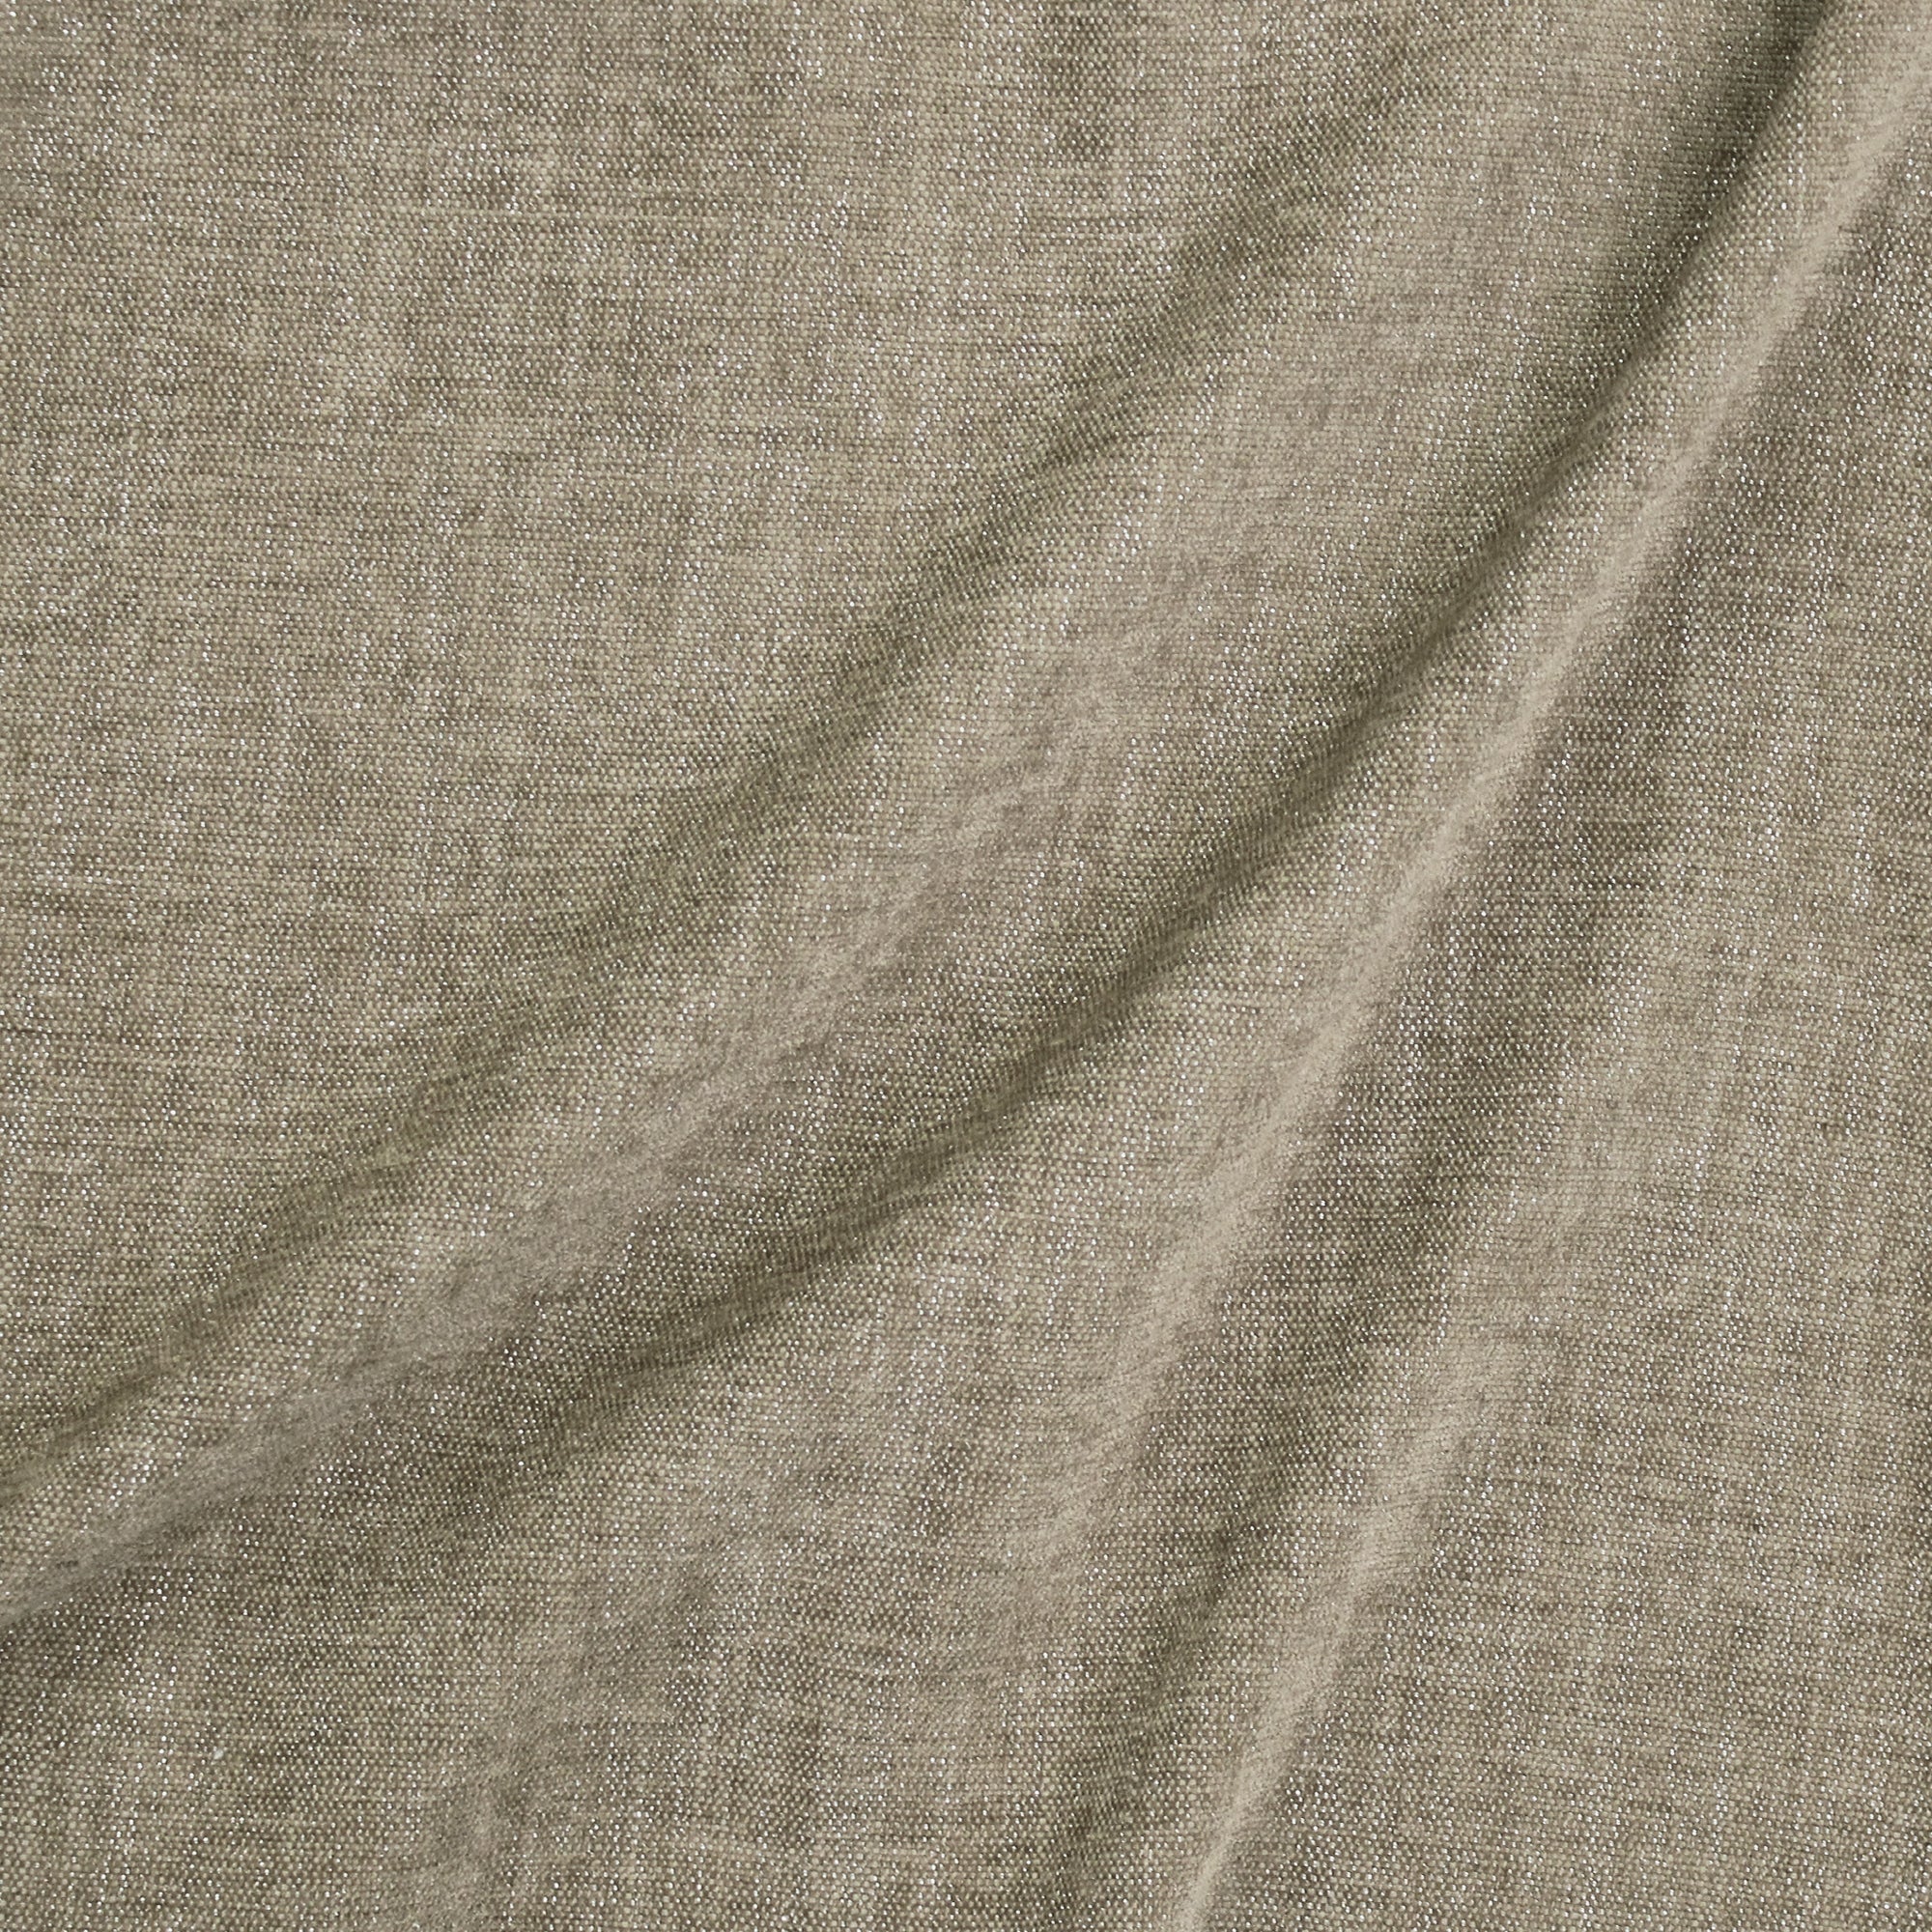 Pandora Fabric | Textured Metellic Linen Look (More Colors)